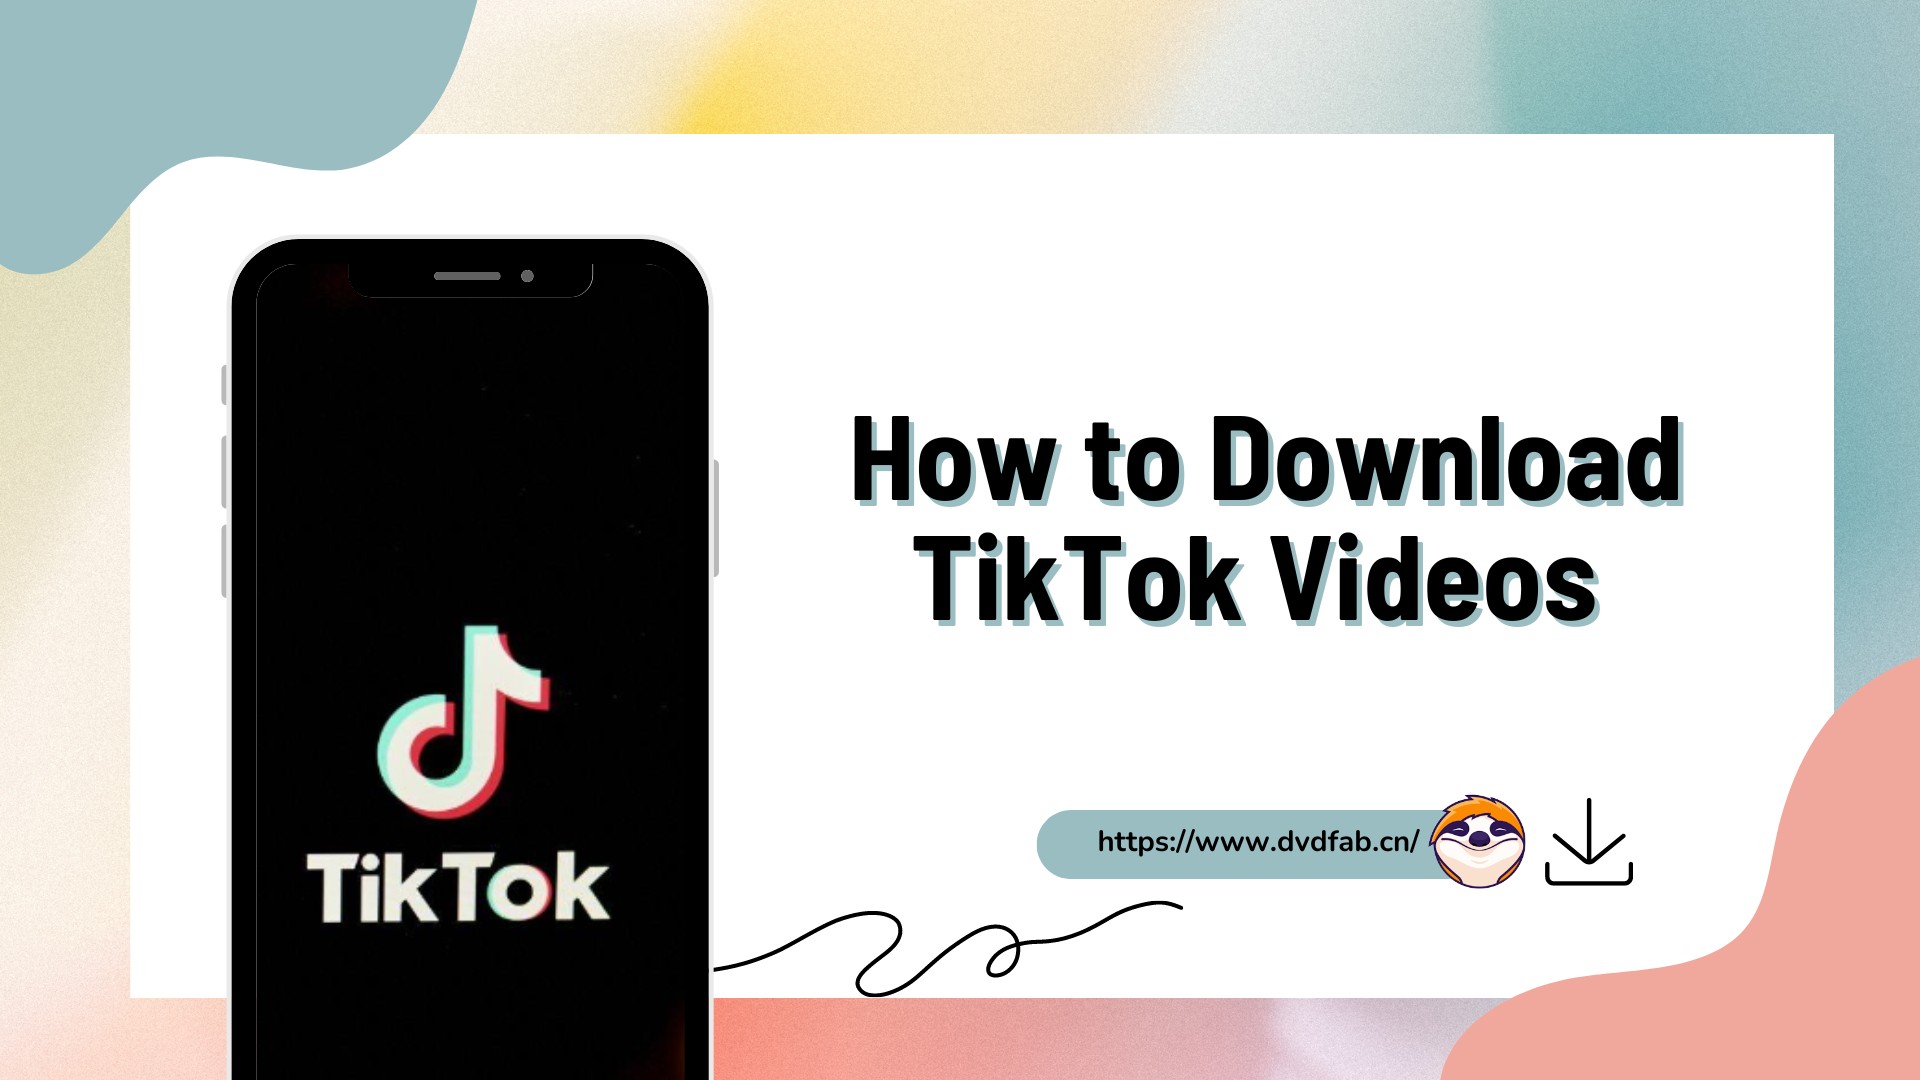 TikTok Video Downloader for PC - Download TikTok Videos in MP4 or MP3